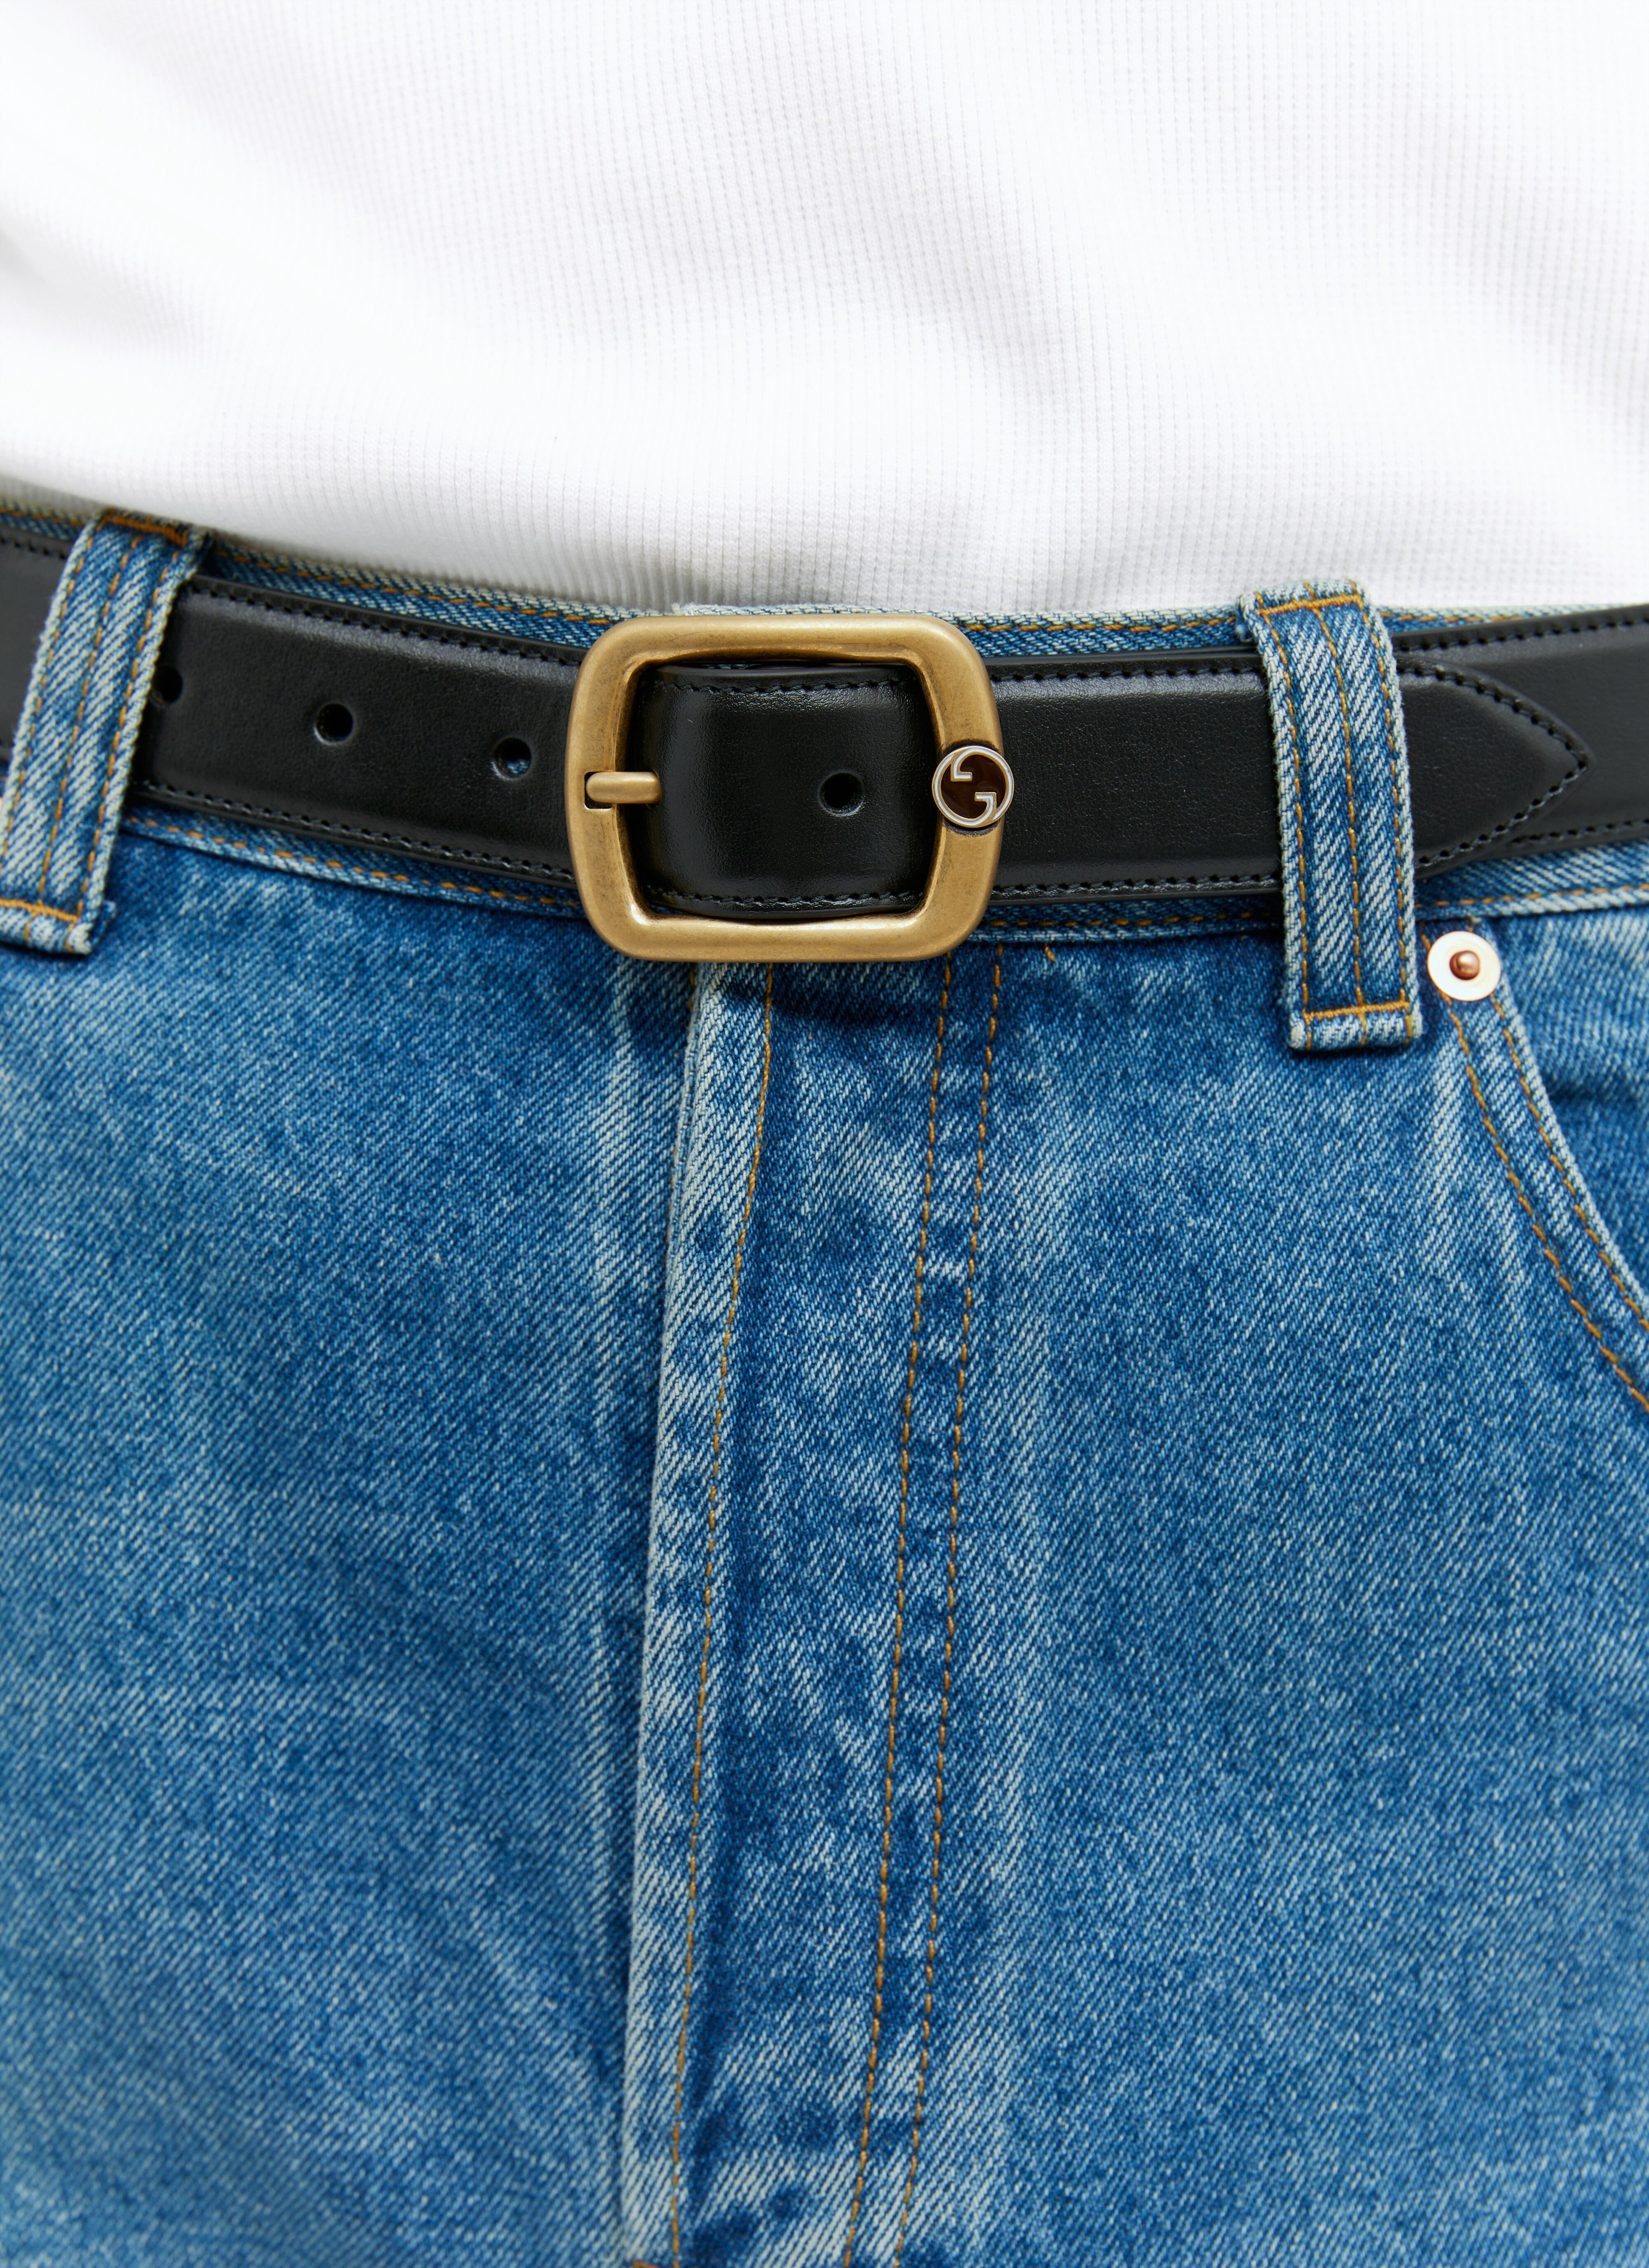 Jacquemus Rectangle Buckle Leather Belt Gold jas0256001